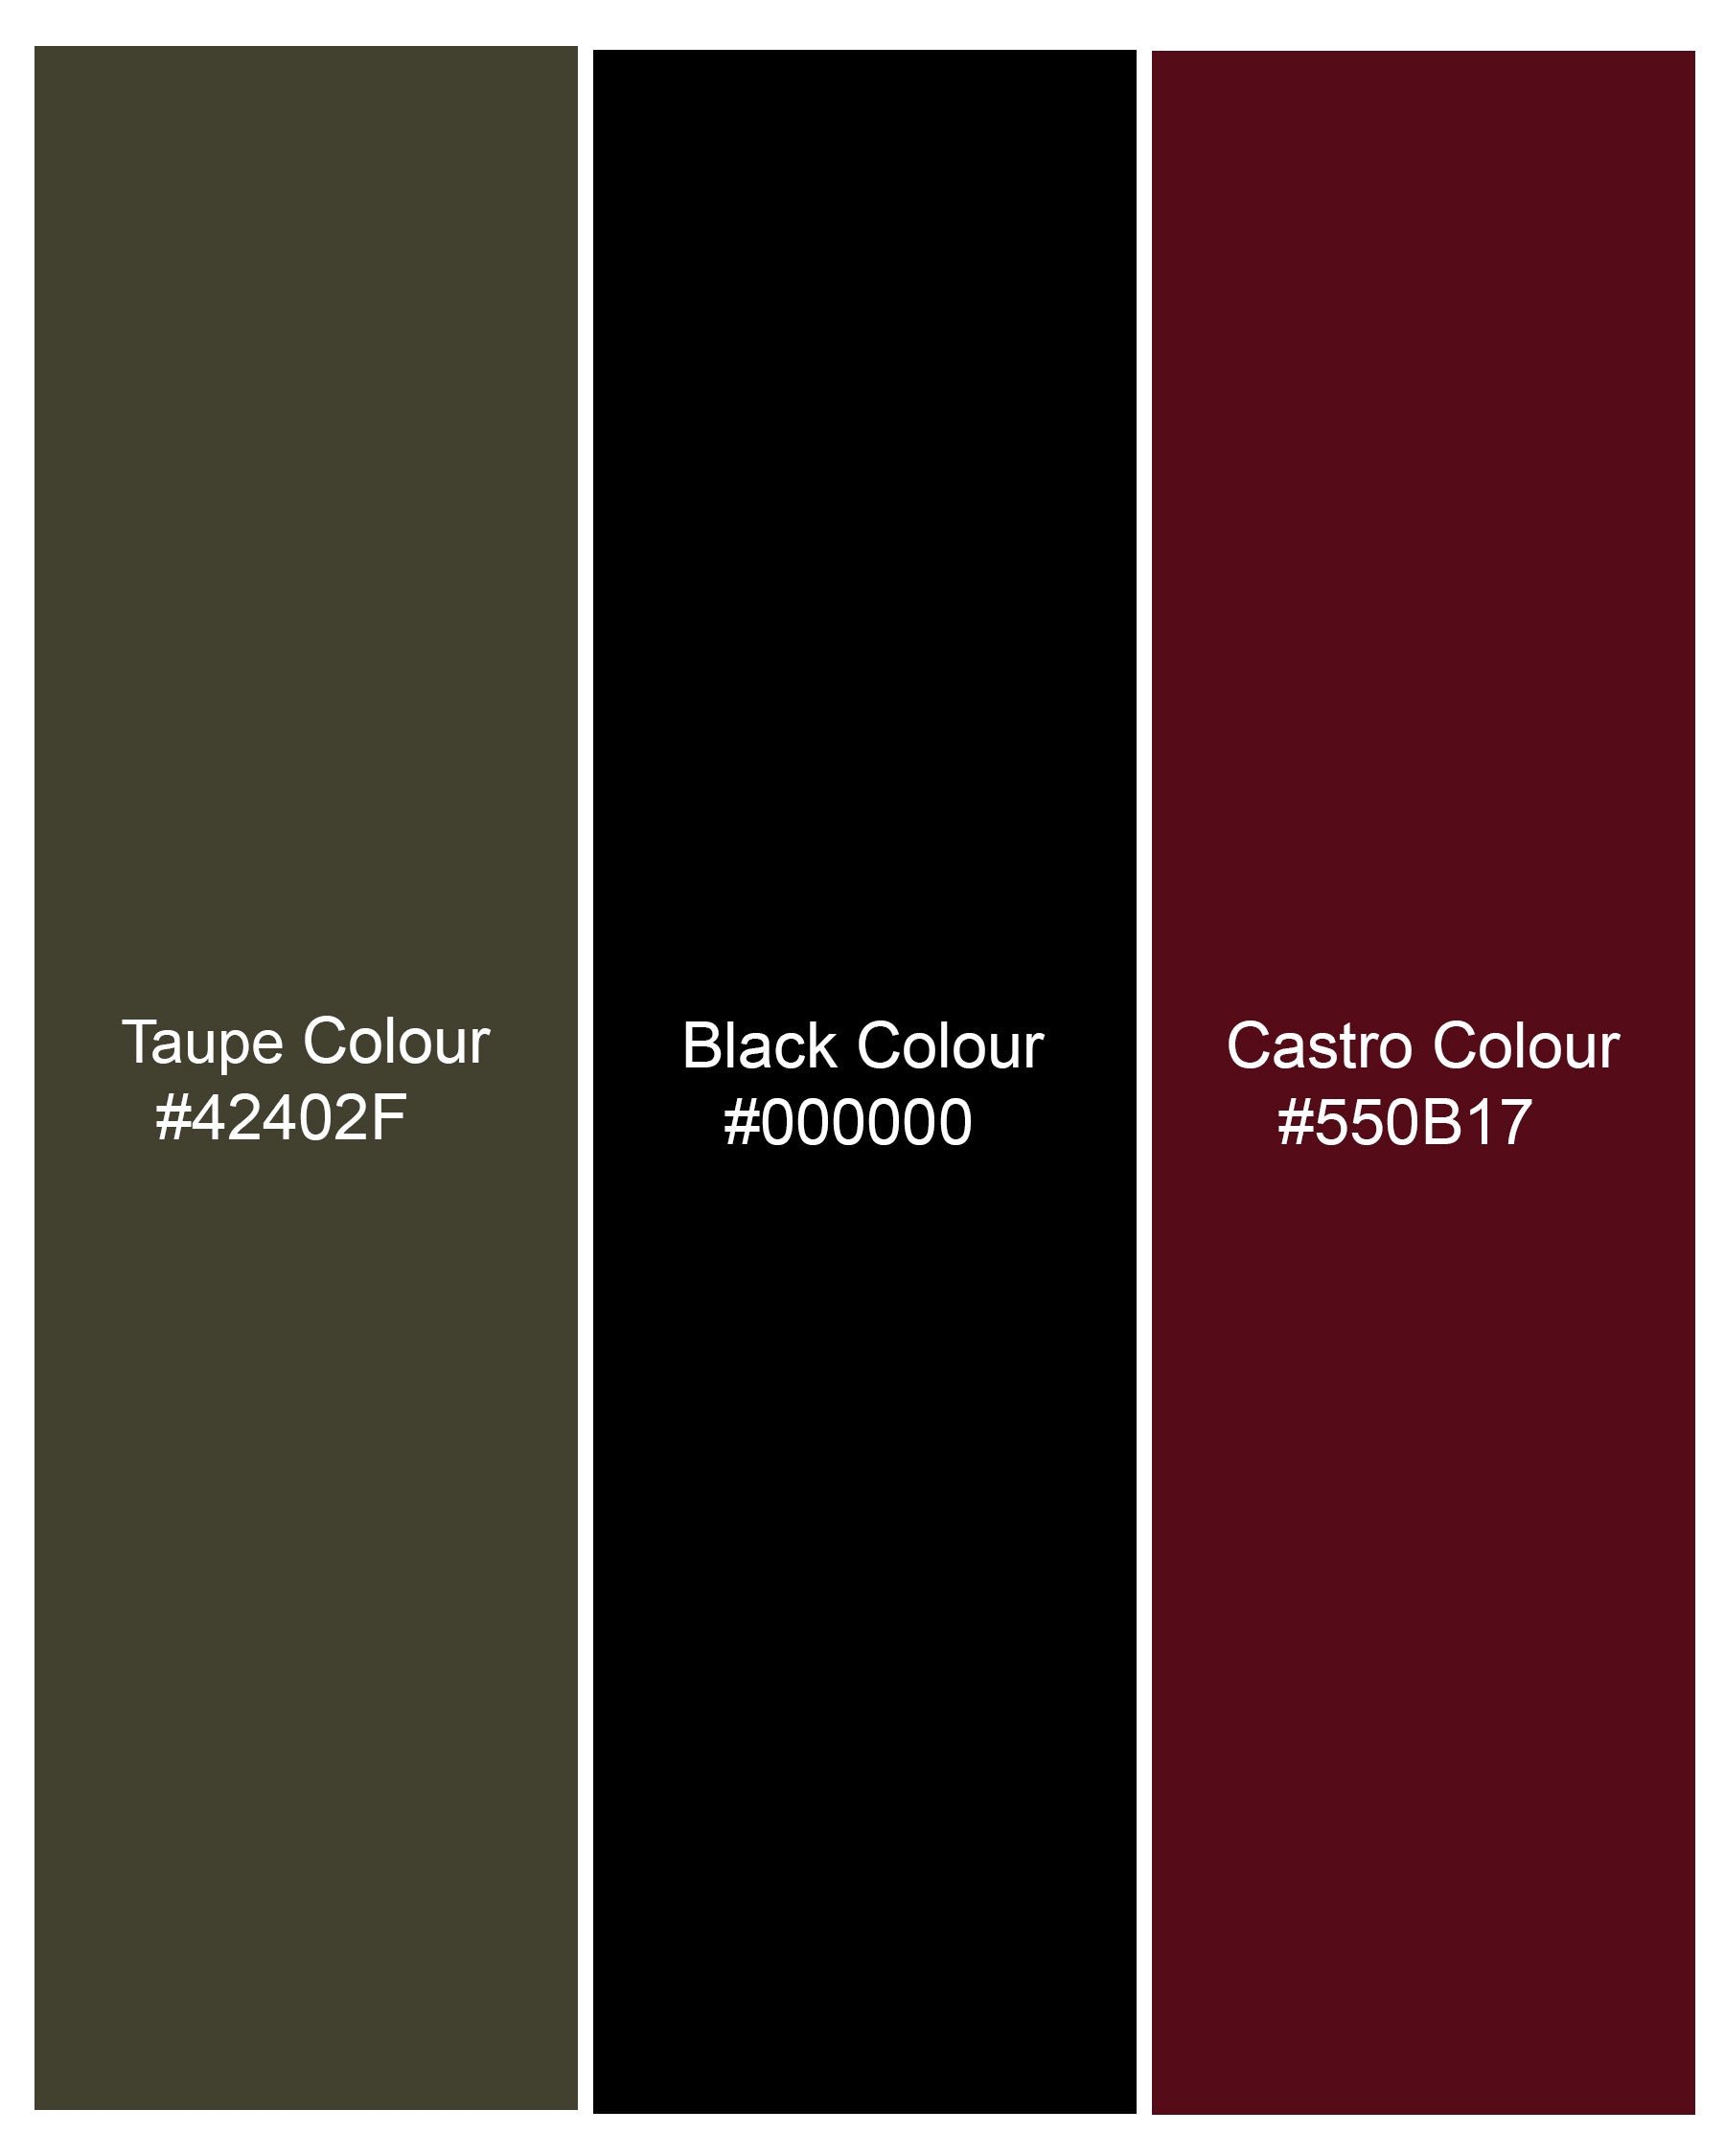 Jade Black with Taupe Green Striped Dobby Premium Giza Cotton Designer Shirt 8338-M-BLK-P194-38, 8338-M-BLK-P194-H-38, 8338-M-BLK-P194-39, 8338-M-BLK-P194-H-39, 8338-M-BLK-P194-40, 8338-M-BLK-P194-H-40, 8338-M-BLK-P194-42, 8338-M-BLK-P194-H-42, 8338-M-BLK-P194-44, 8338-M-BLK-P194-H-44, 8338-M-BLK-P194-46, 8338-M-BLK-P194-H-46, 8338-M-BLK-P194-48, 8338-M-BLK-P194-H-48, 8338-M-BLK-P194-50, 8338-M-BLK-P194-H-50, 8338-M-BLK-P194-52, 8338-M-BLK-P194-H-52